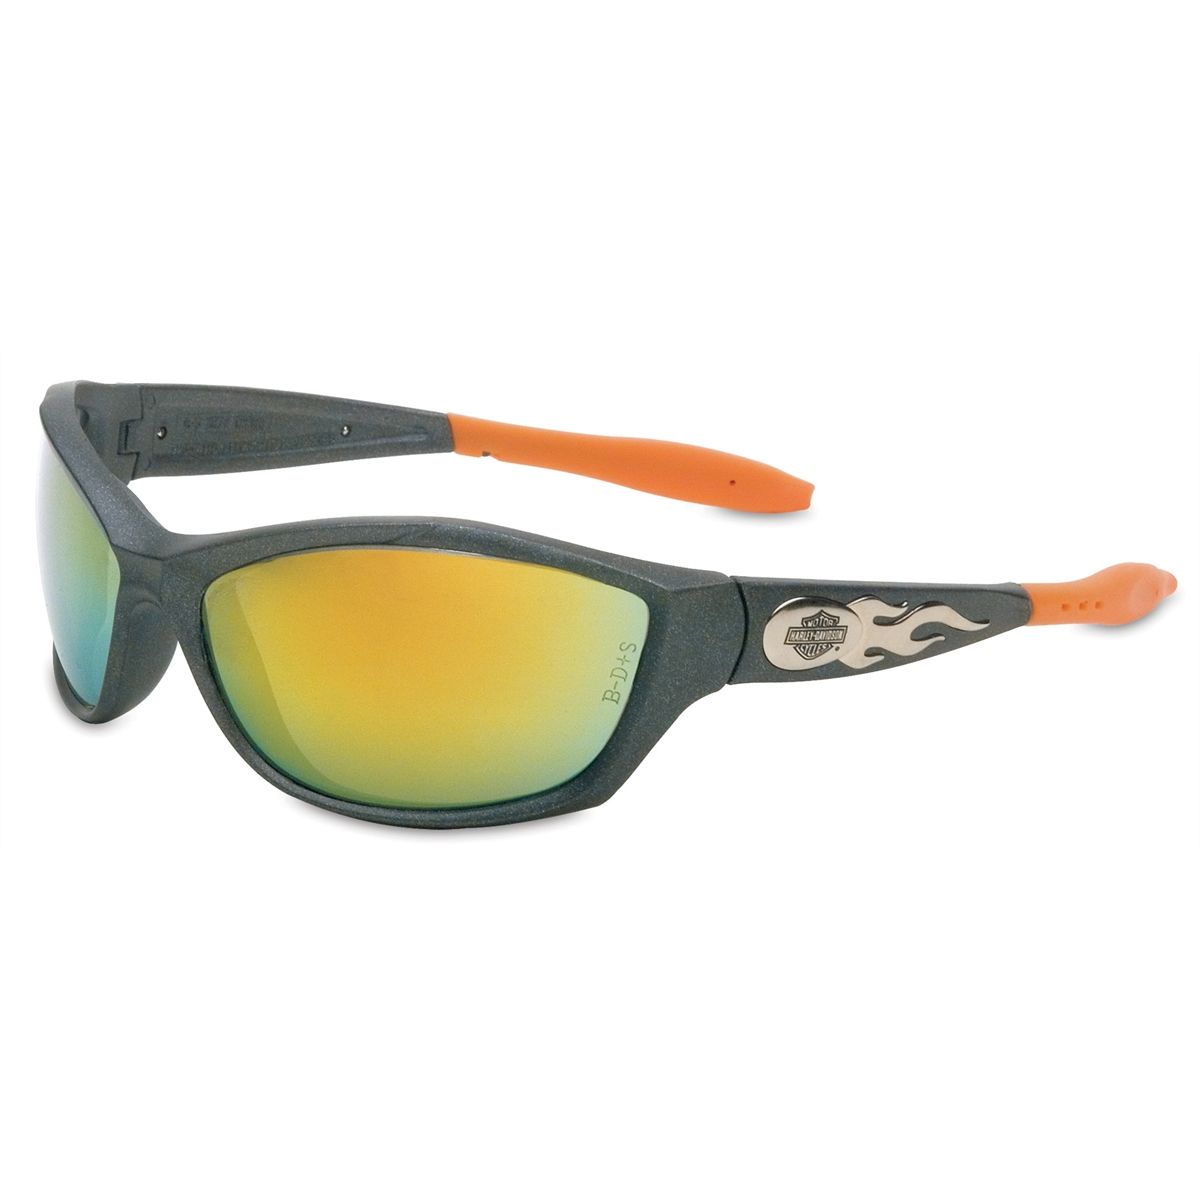 Harley Davidson Safety Glasses with Gunmetal Frame and Orange Mi